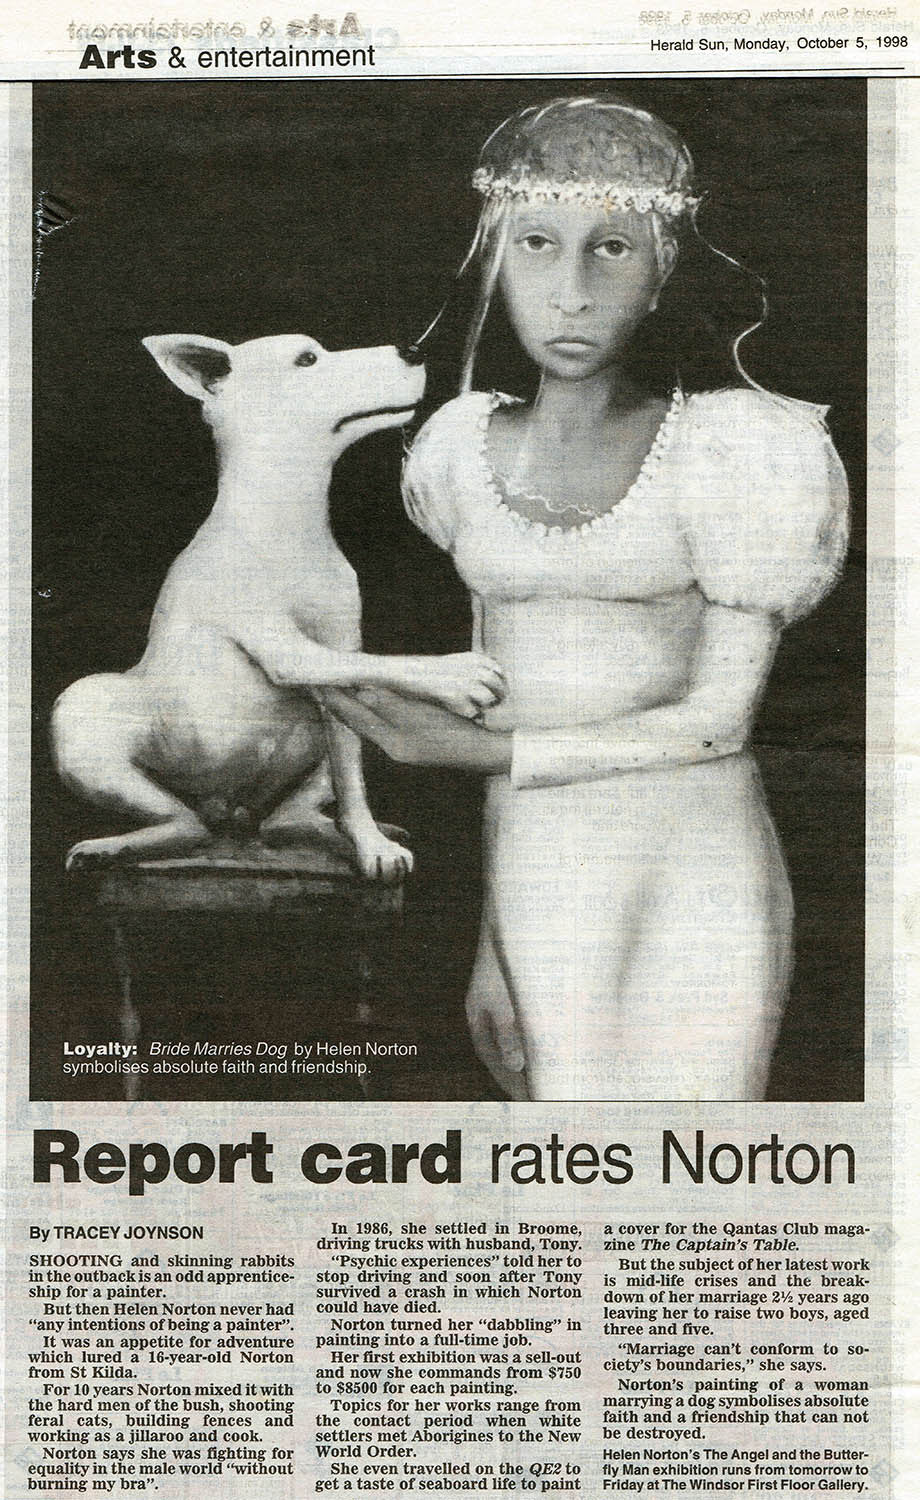 1998 Report Card Rates Norton - Tracey Joynson - Herald Sun